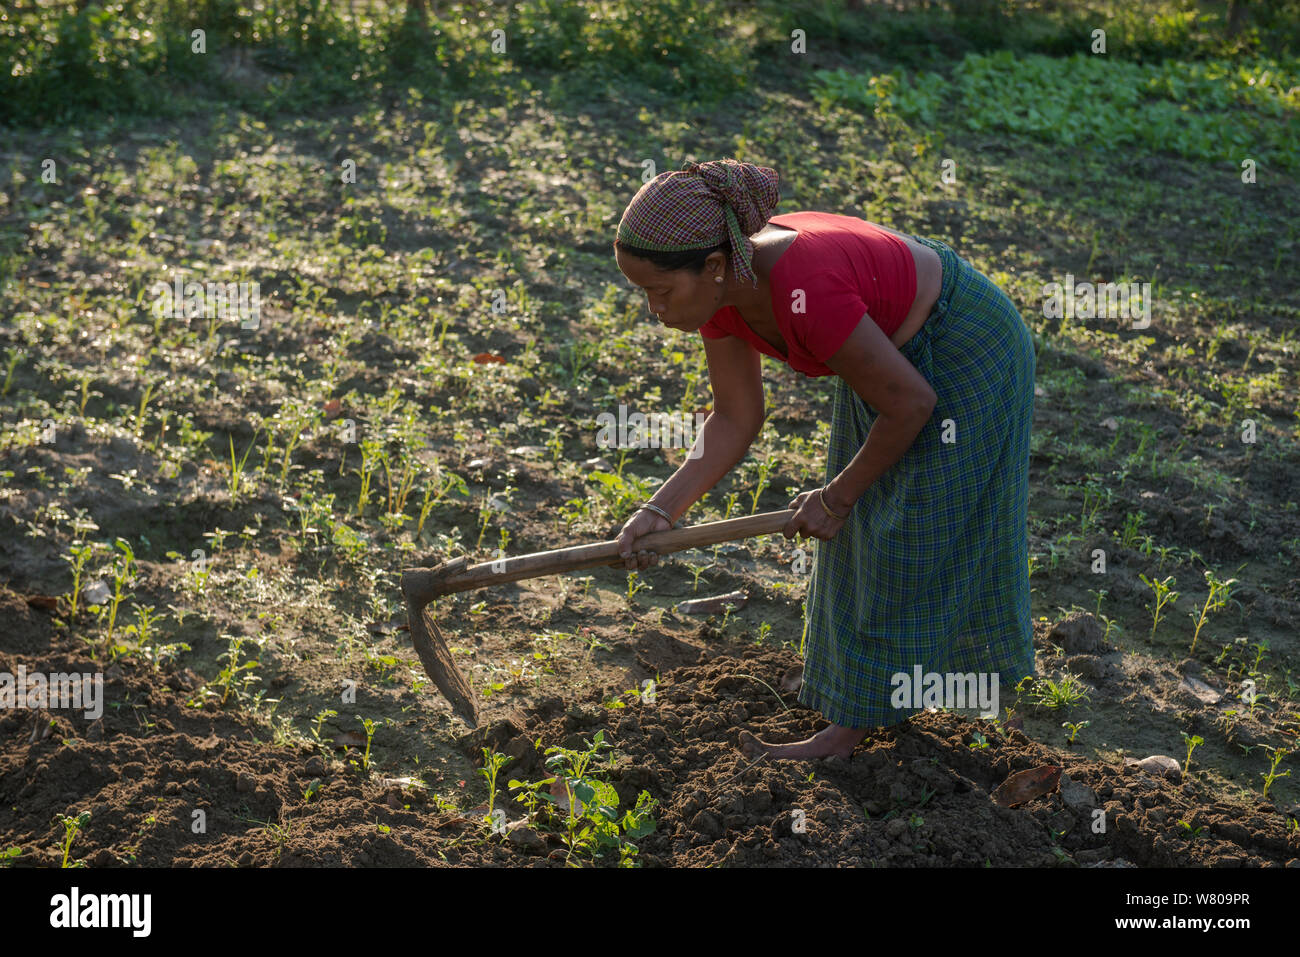 Mising tribe woman tilling field, Majuli Island, Brahmaputra River, Assam, North East India, October 2014. Stock Photo